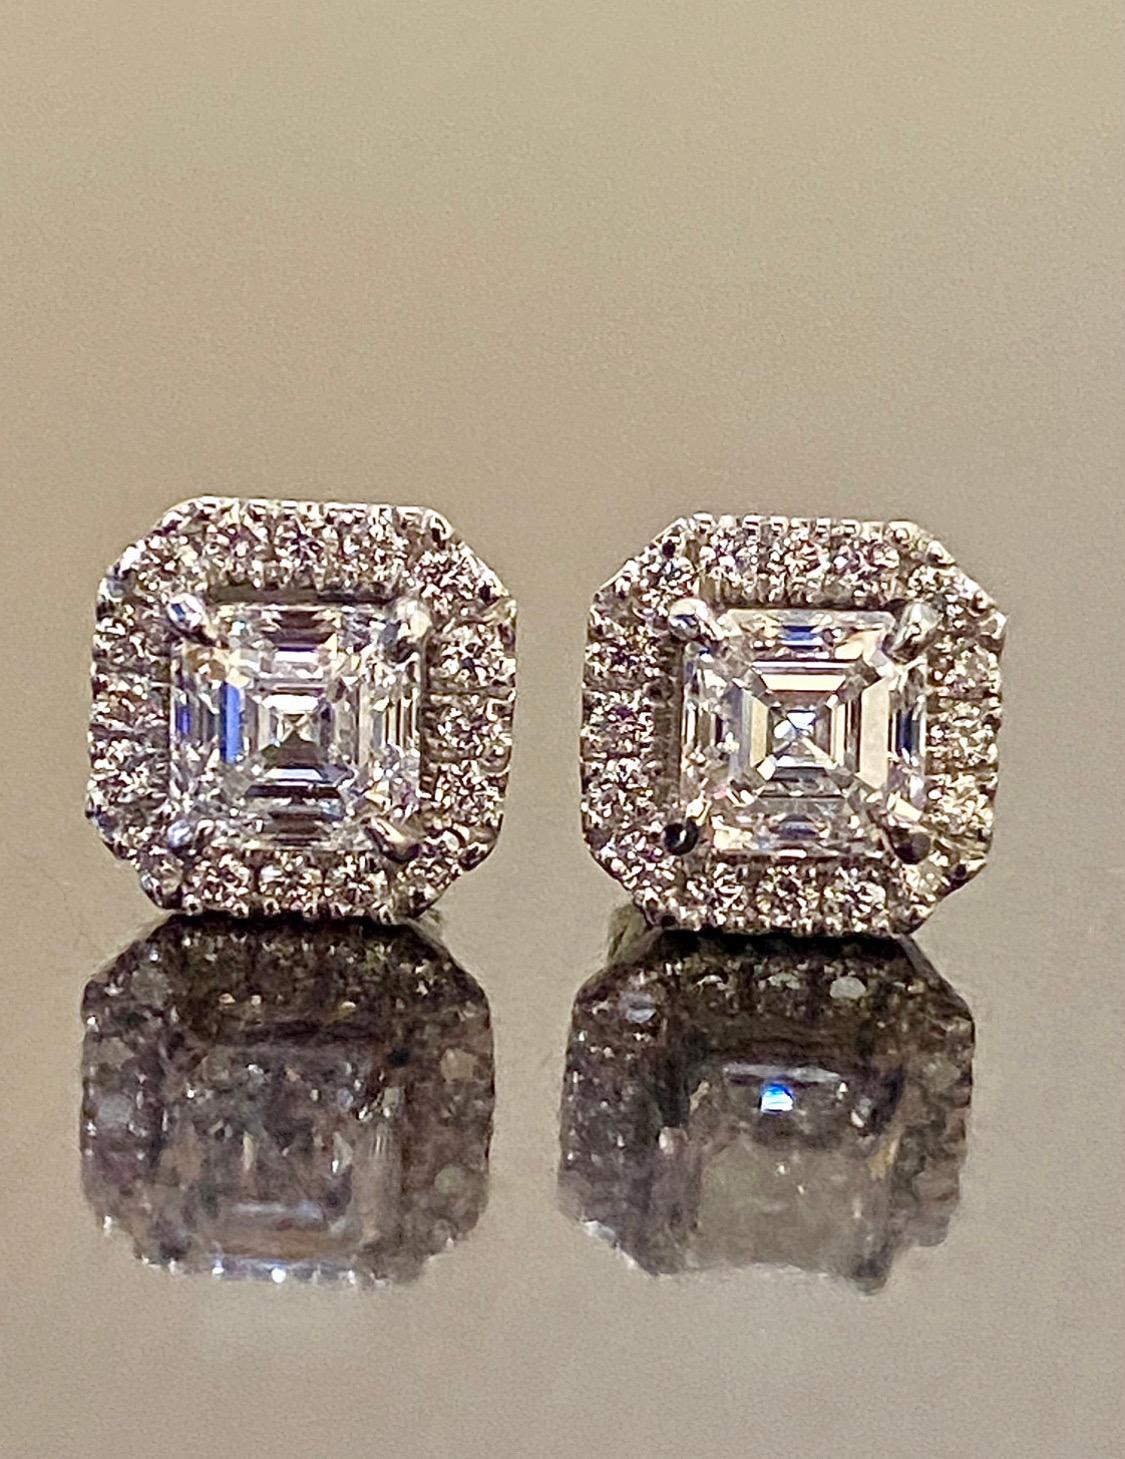 DeKara Designs Collection

Metal- 90% Platinum, 10% Iridium.

Stones- 2 GIA Certified Asscher Cut Diamonds F Color SI1 Clarity 0.91 Carat and 0.91 Carat, 32 Round Diamonds F-G Color VS2-SI1 Clarity, 0.40 Carats.

0.91 F SI1 GIA Report Number